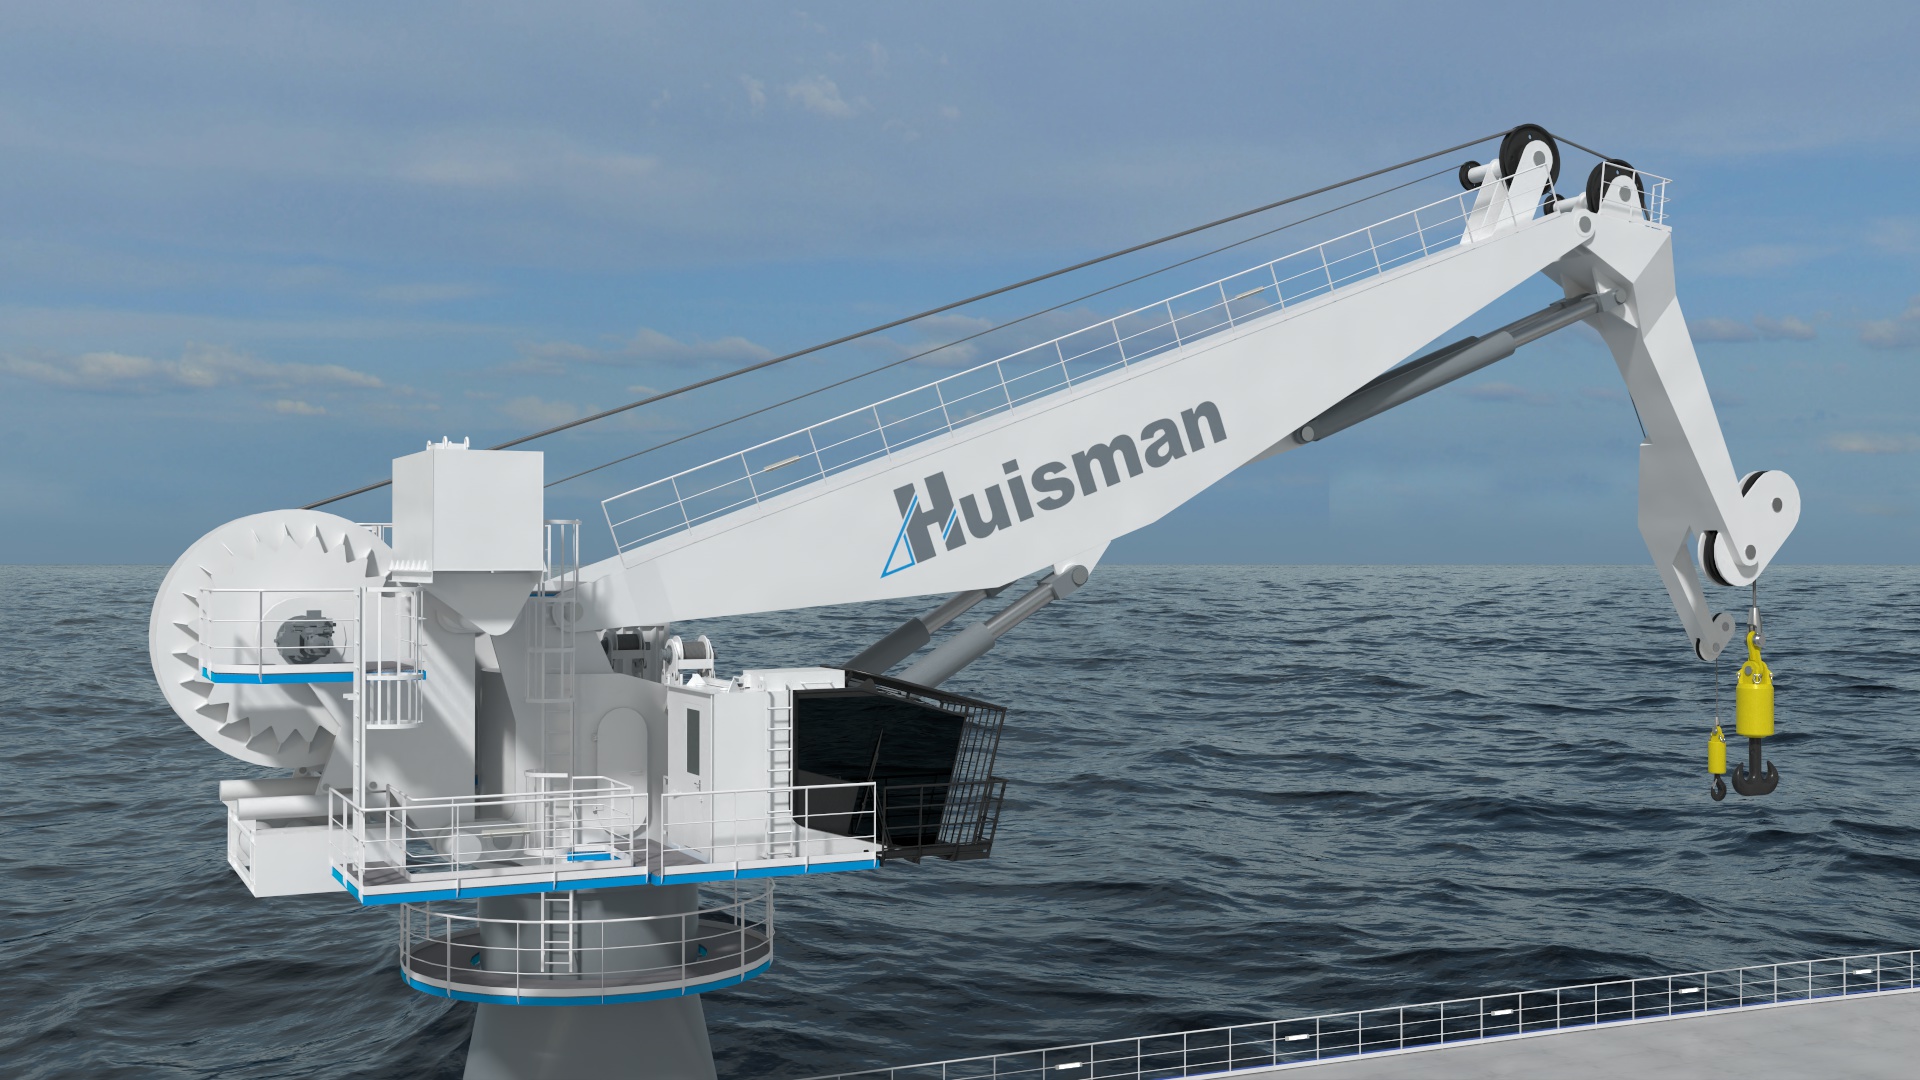 Huisman to deliver deepwater Knuckle Boom Crane for Coastal International Marine Inc.